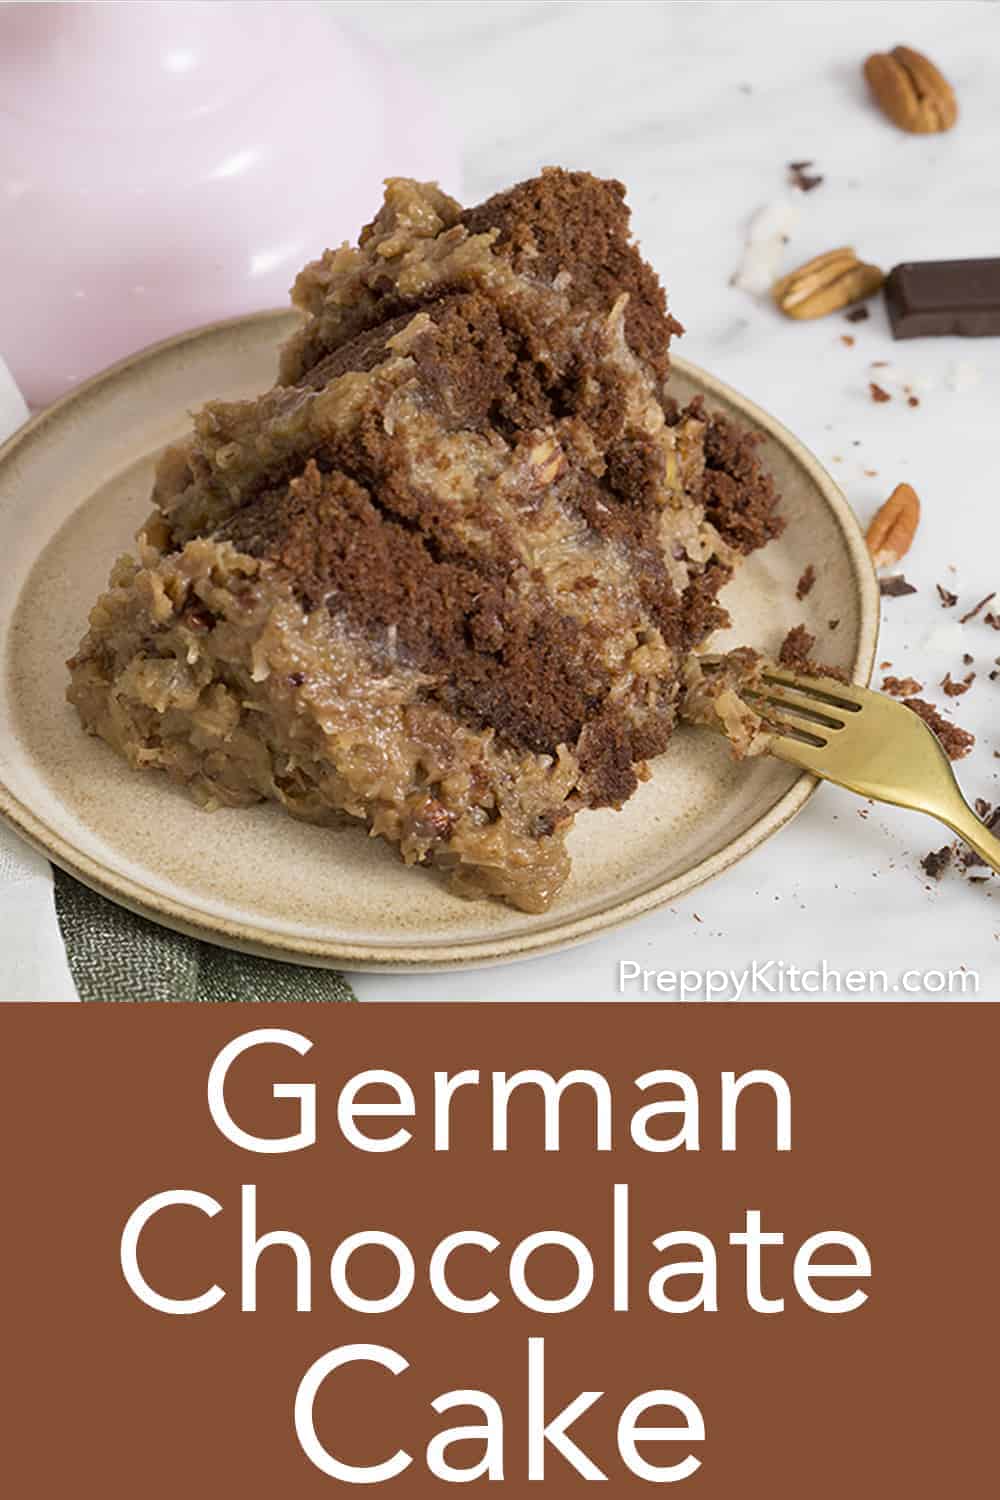 German Chocolate Cake - Preppy Kitchen